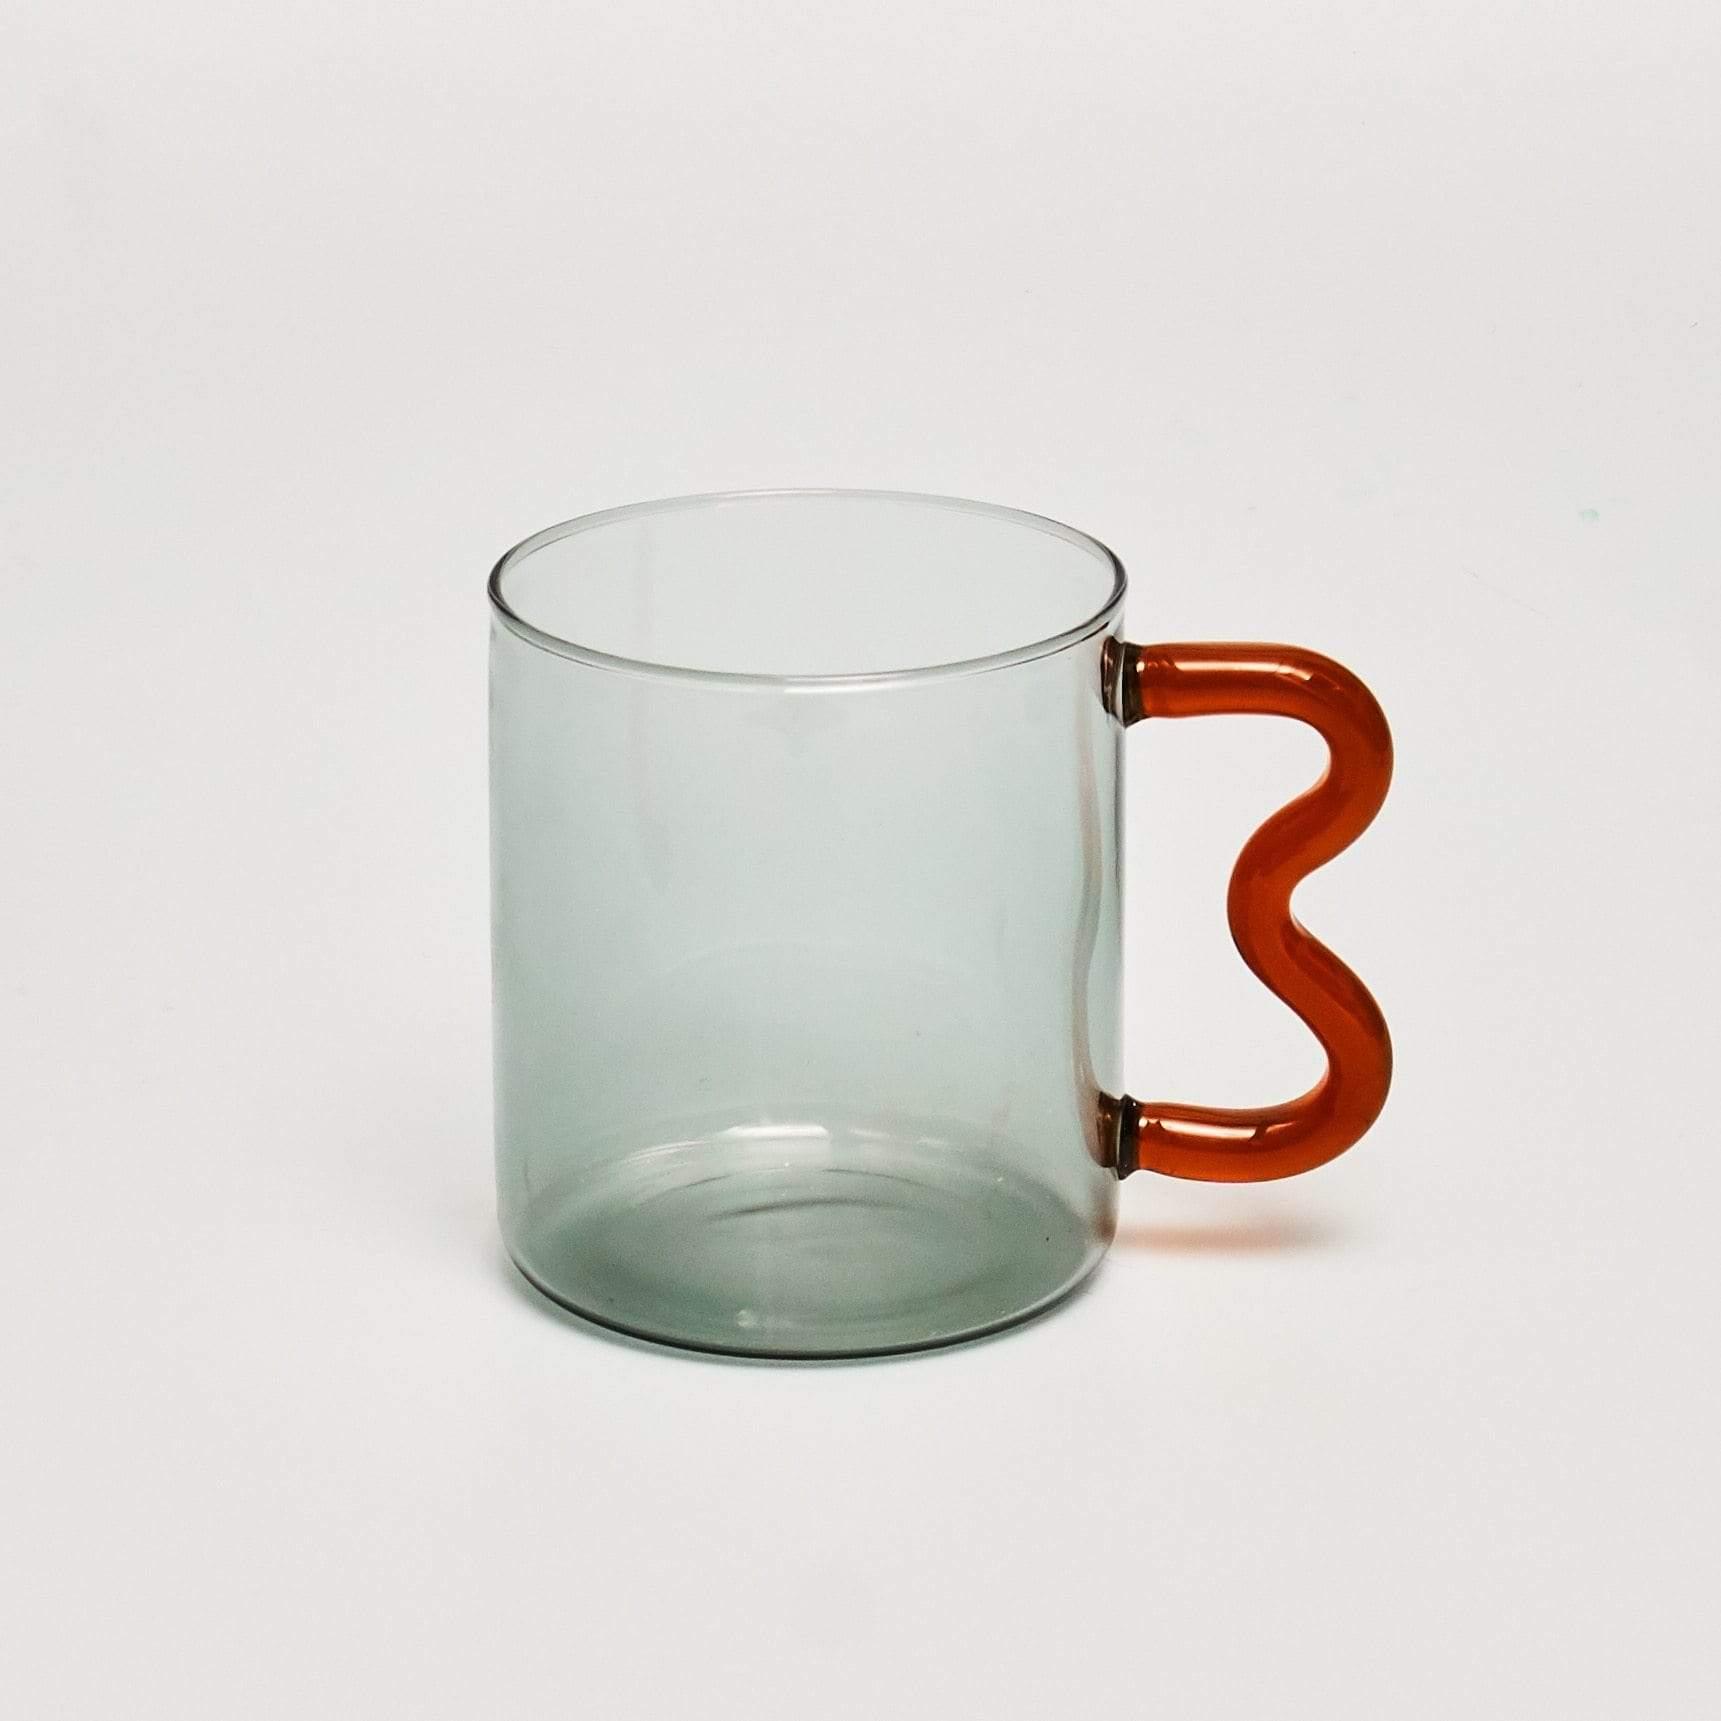 Shop 0 Grey 05 / 301-400ml Design Colorful Ear Glass Mug Handmade Simple Wave Coffee Cup for Hot Water Tumbler Gift Drinkware 300ml Mademoiselle Home Decor